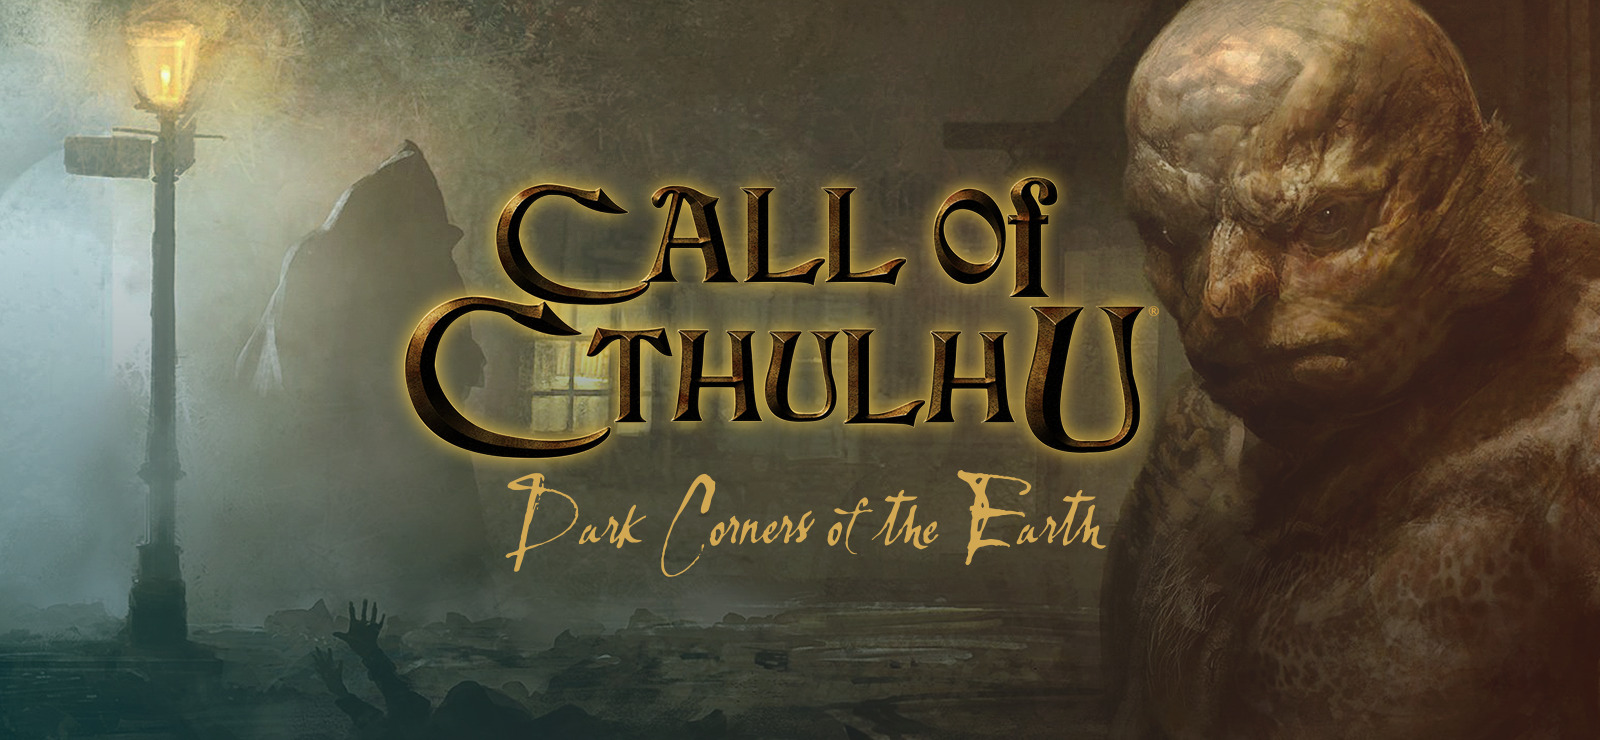 progenie bicapa Expresamente 67% Call of Cthulhu: Dark Corners of the Earth on GOG.com